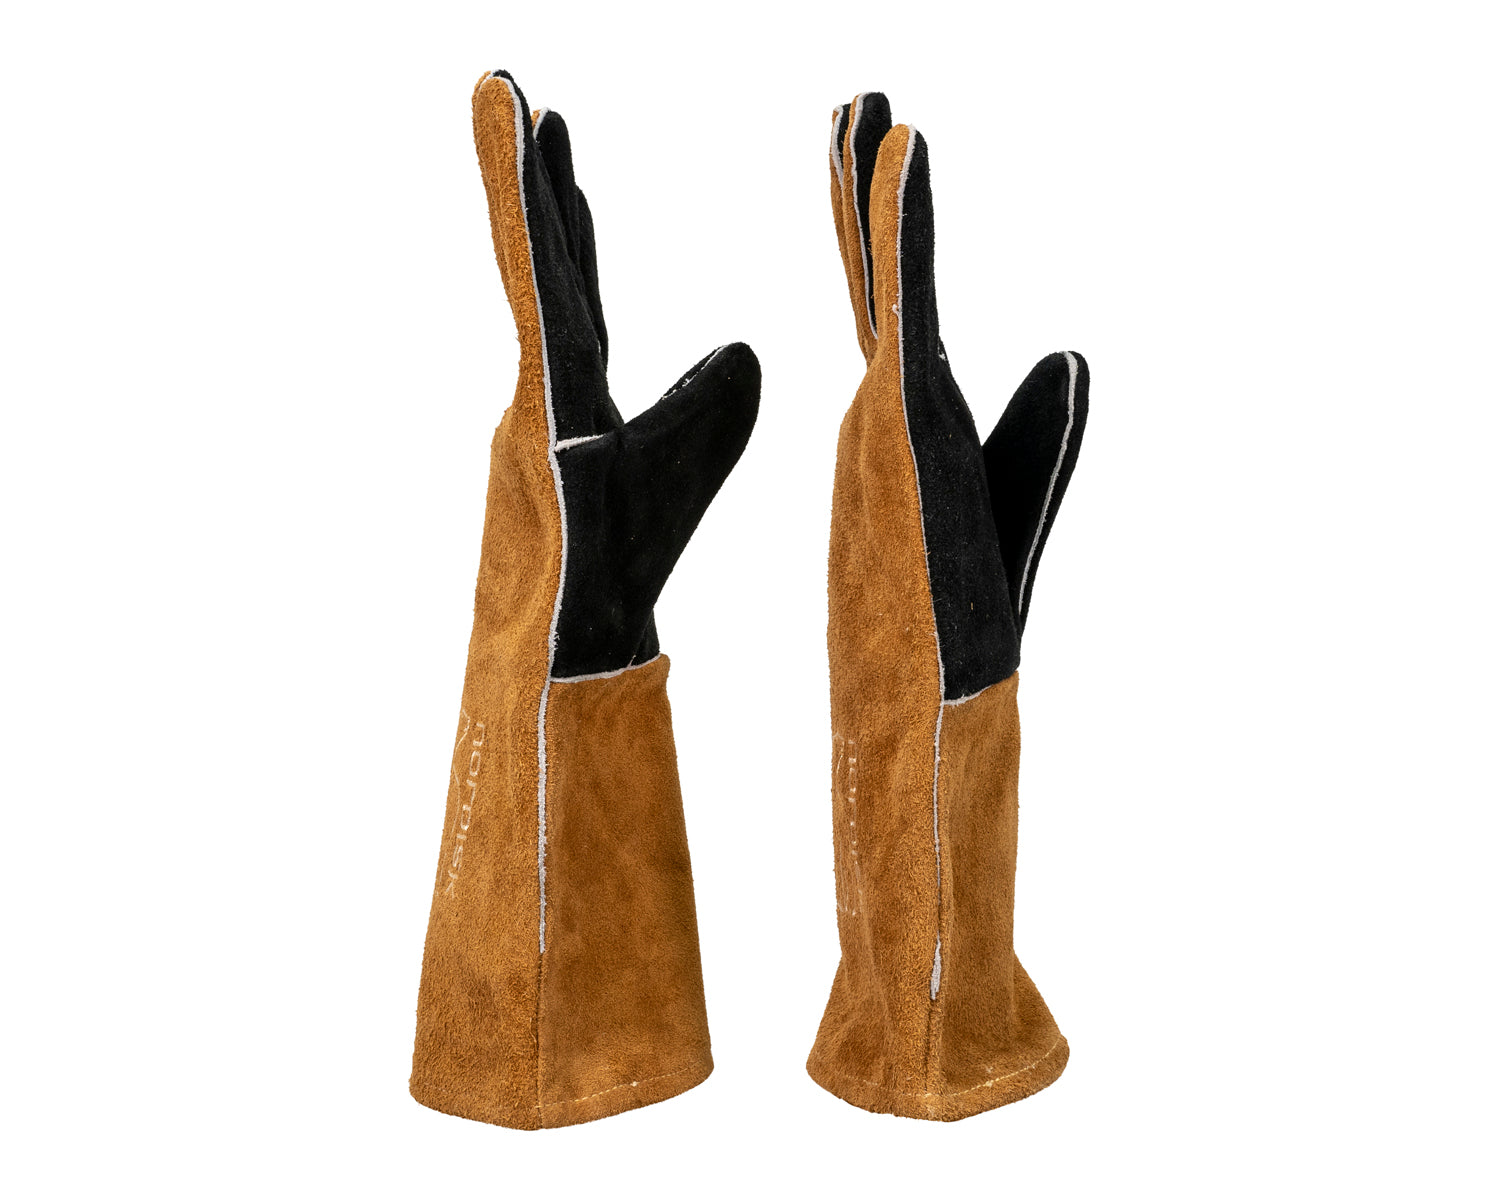 Torden gloves - Brown/Black